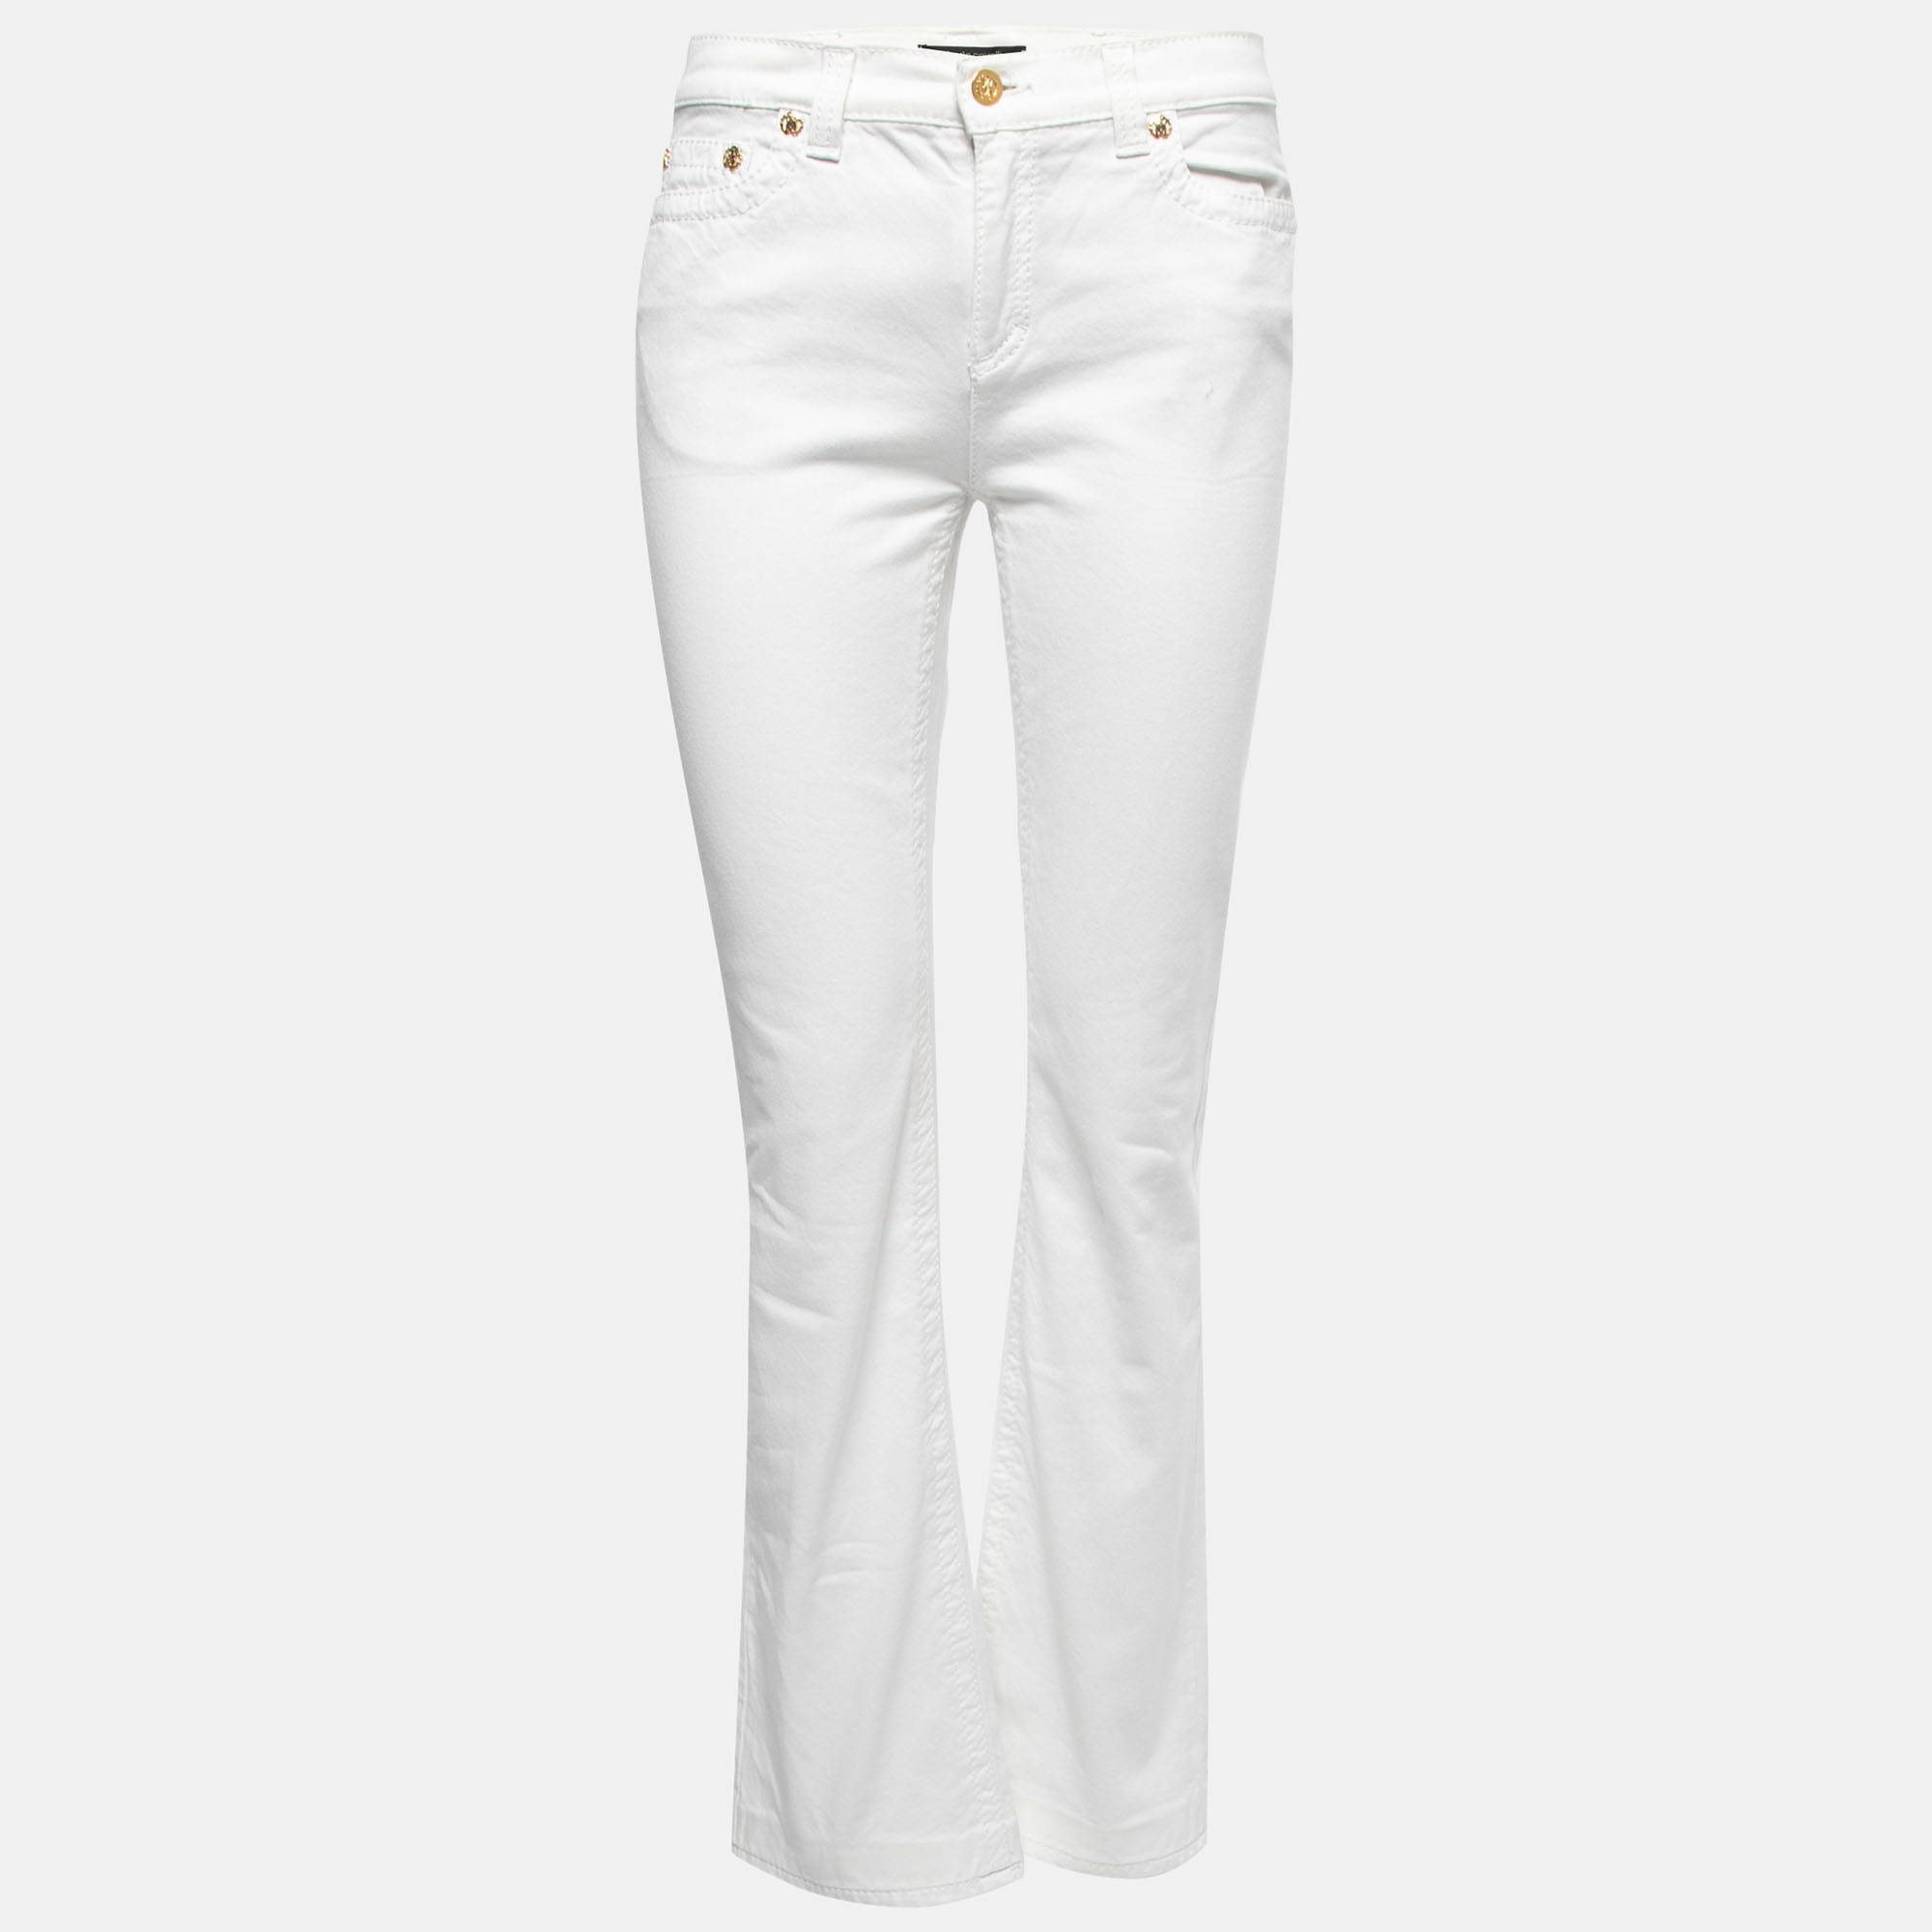 Pre-owned Roberto Cavalli White Denim Flared Jeans L Waist 30"